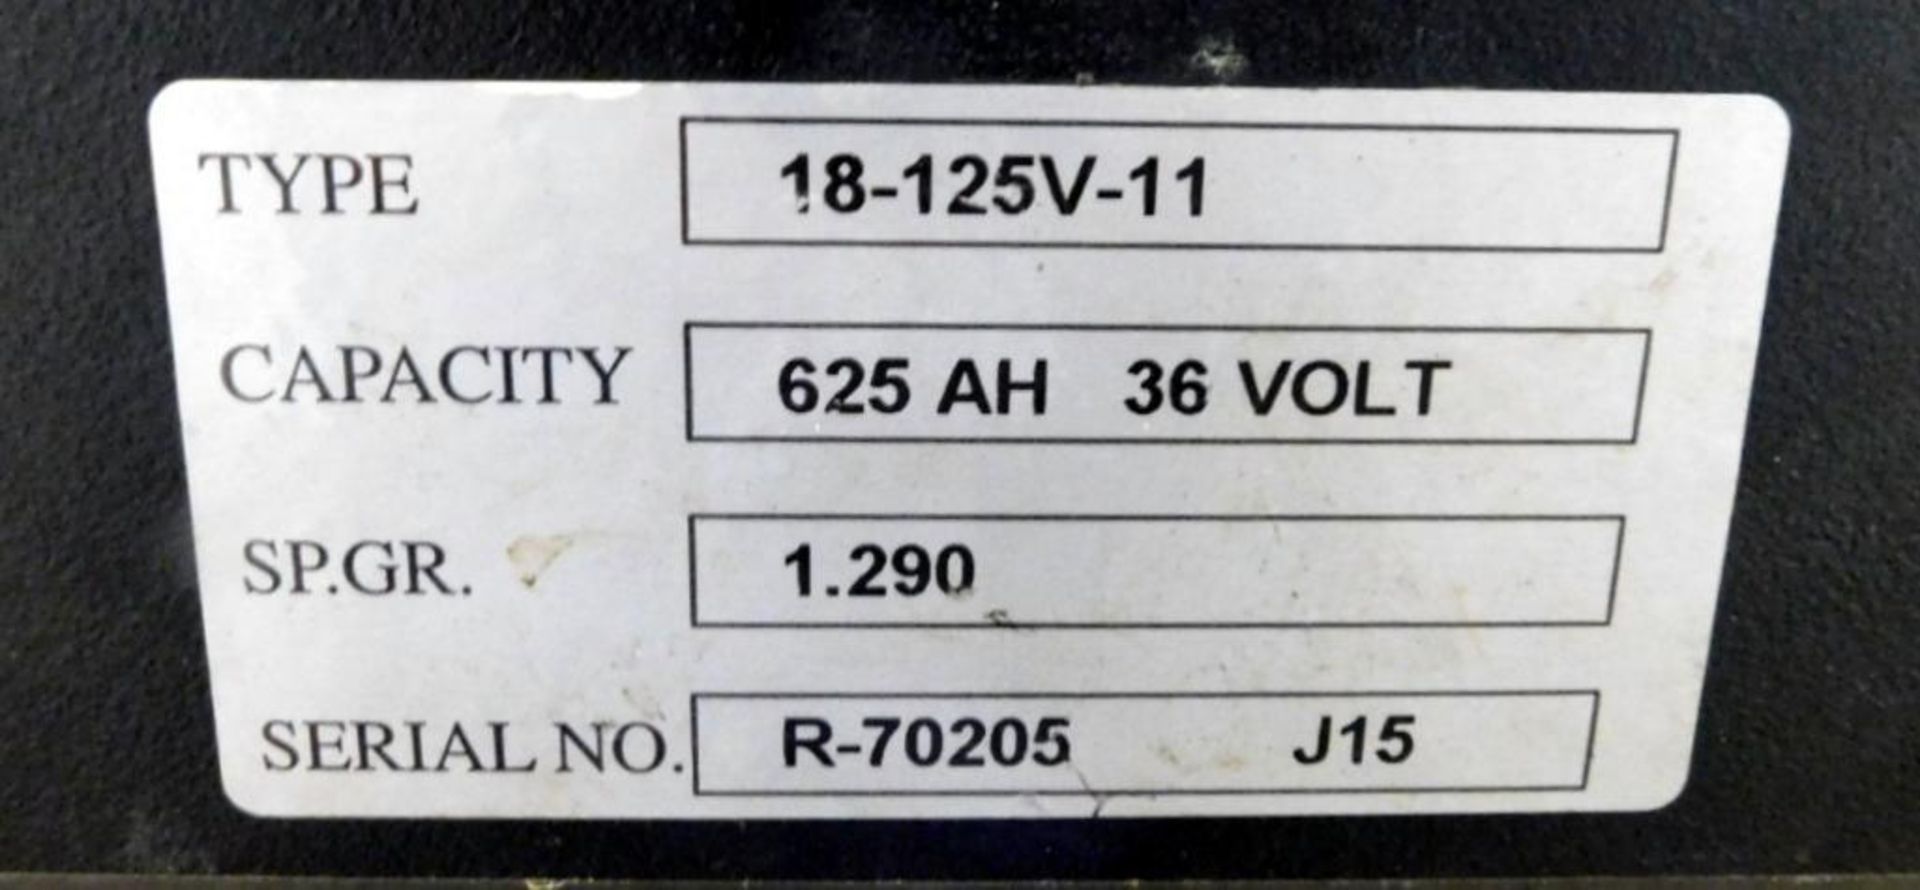 DC Kilowatts Inc. 36 Volt Forklift Battery, Type 18-125V-11, Serial # R-70205 J15. (REPORTED - Image 3 of 3